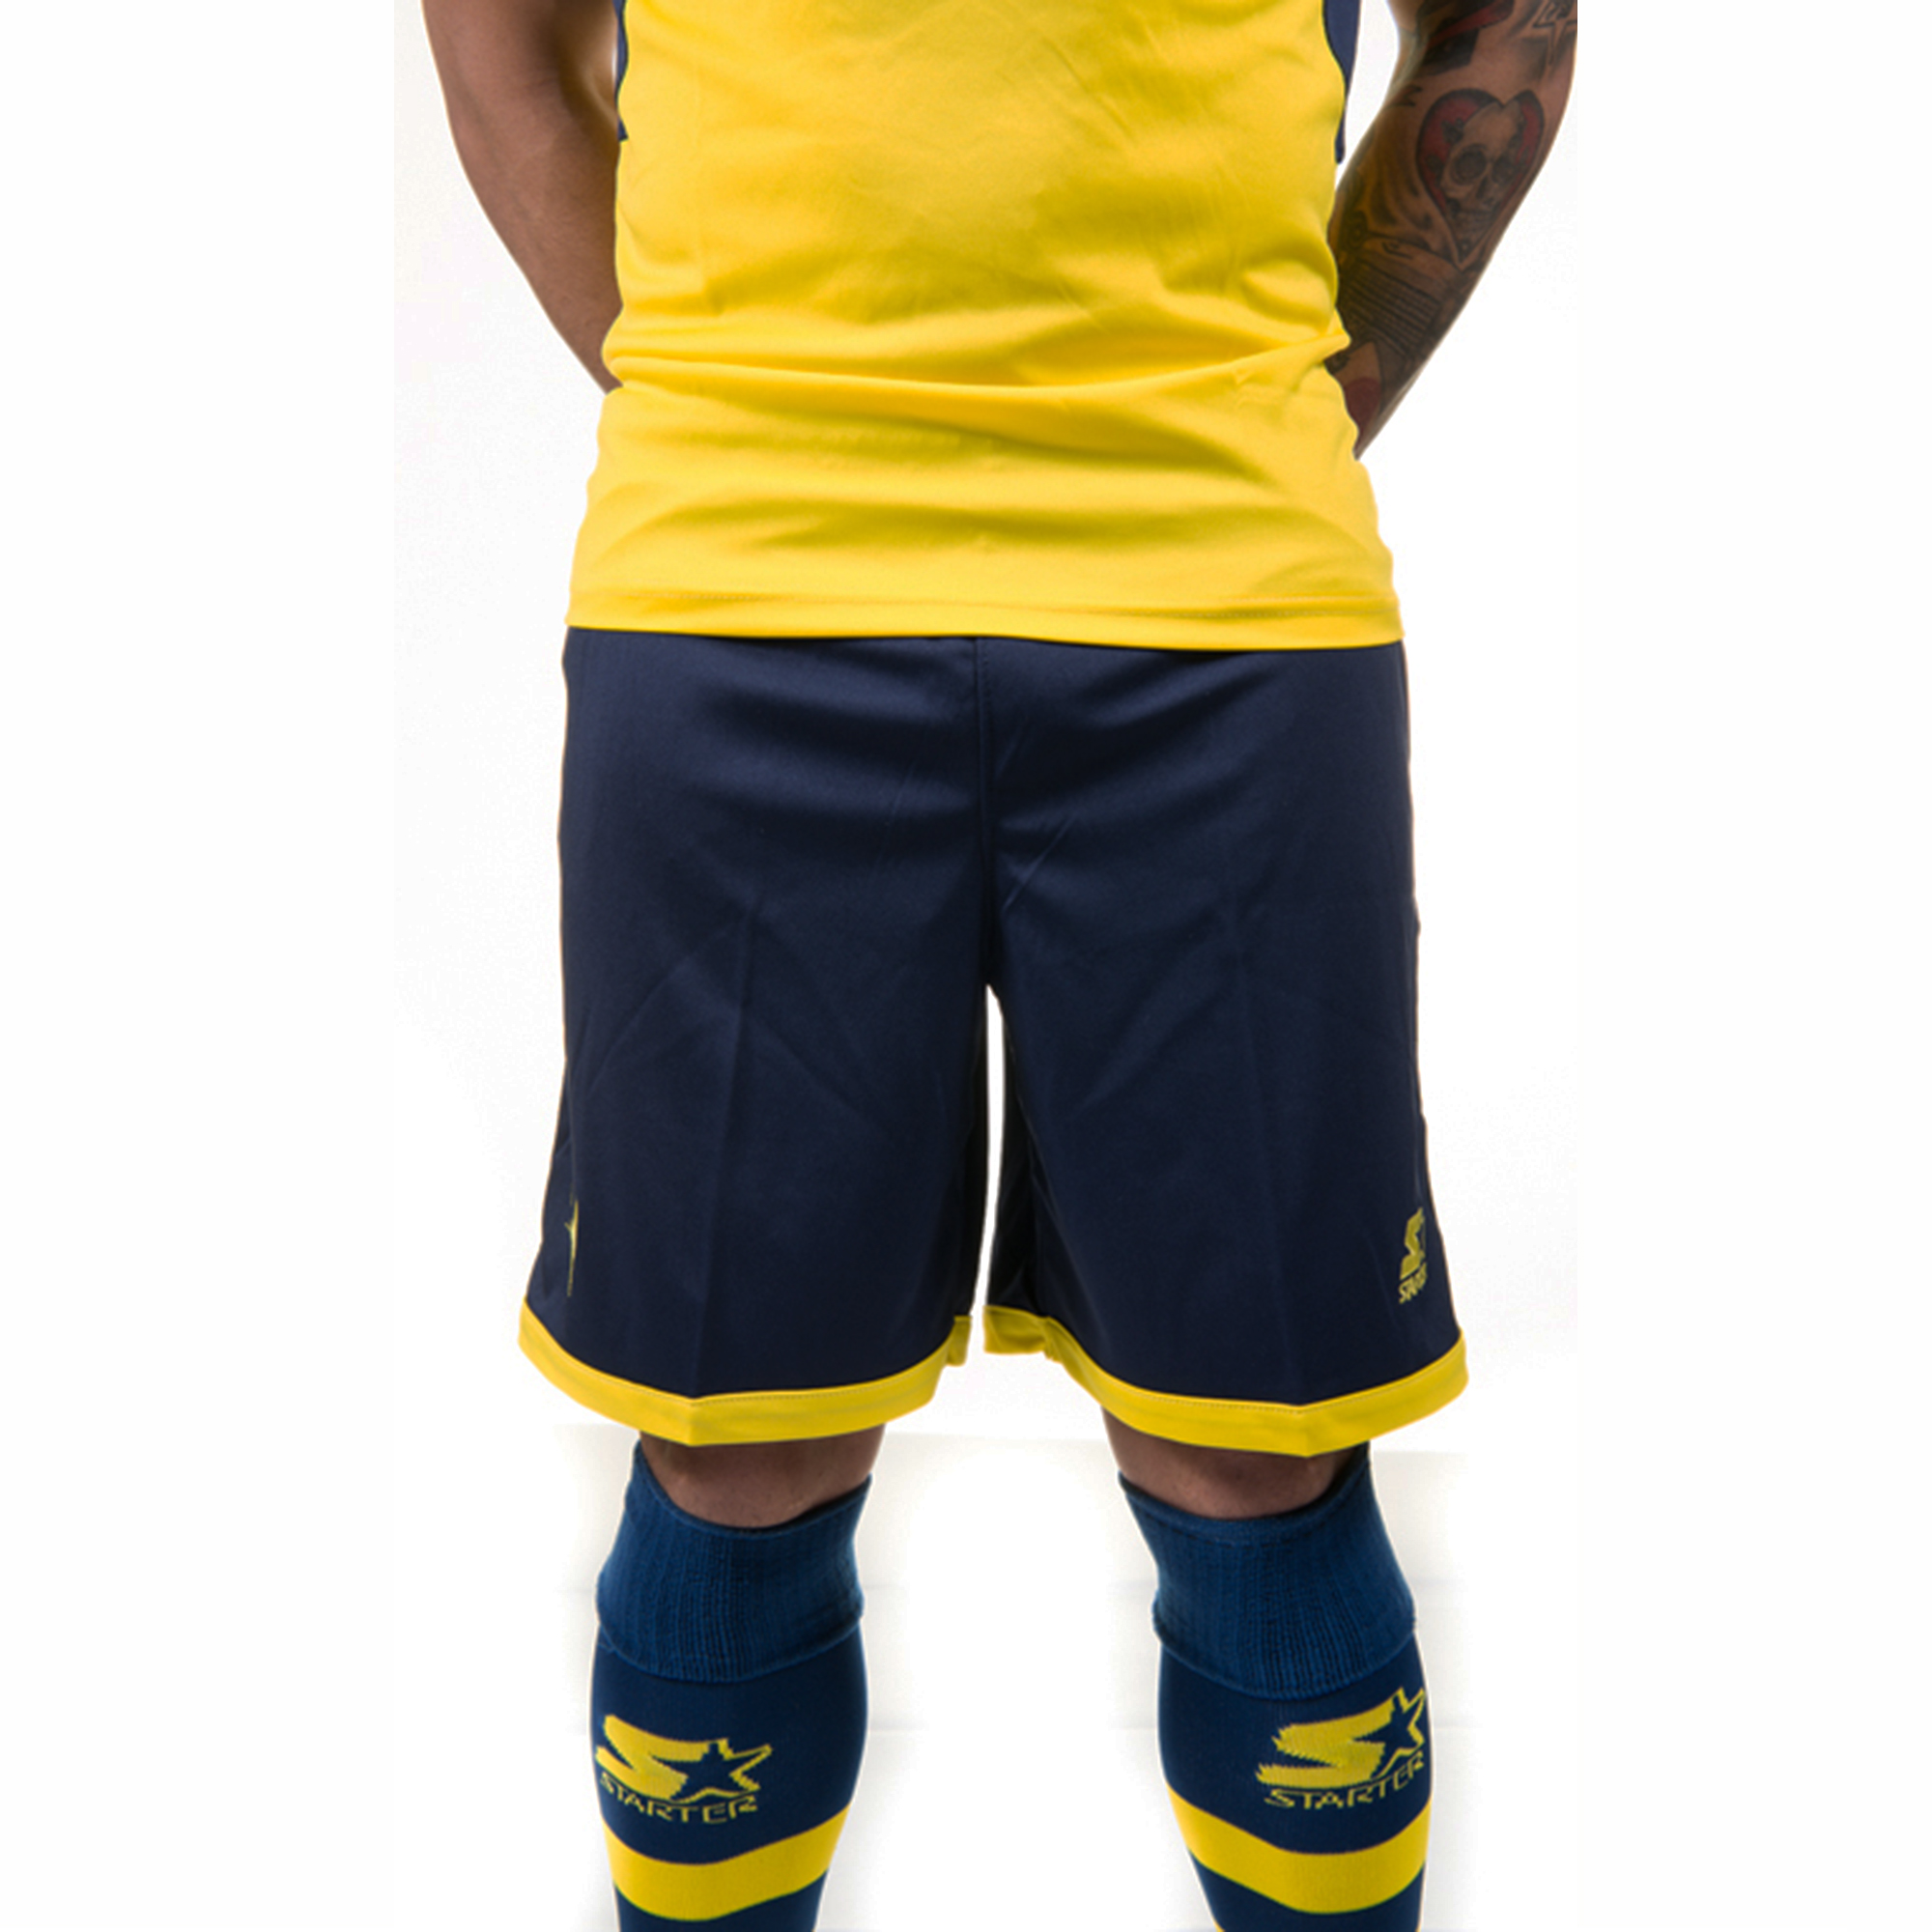 oxford-united-17-18-home-kit-shorts